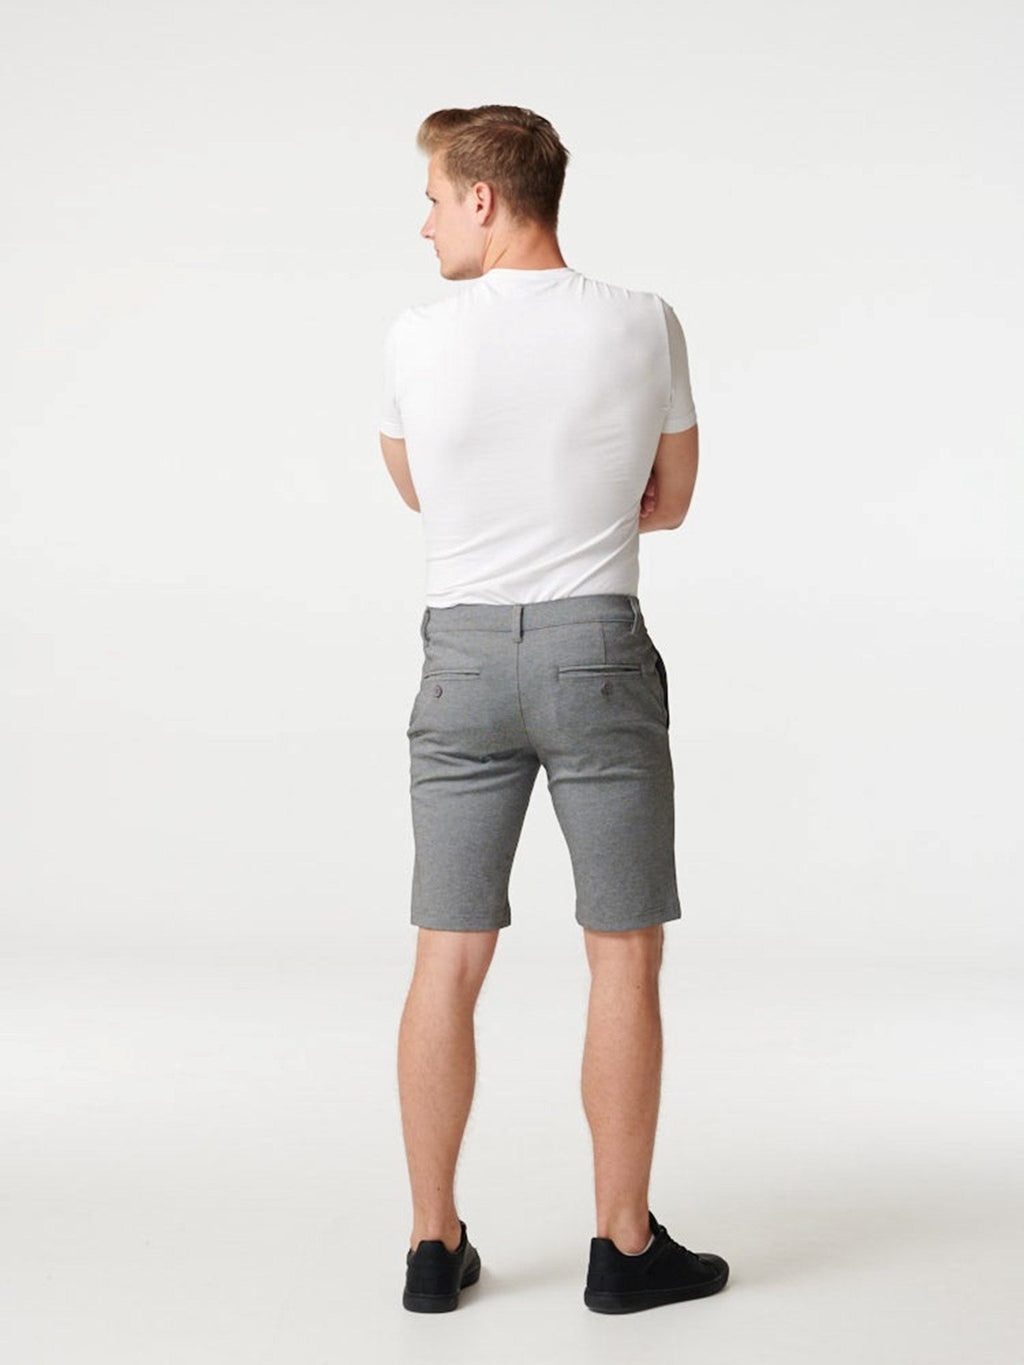 Chino Shorts - Mottled gray